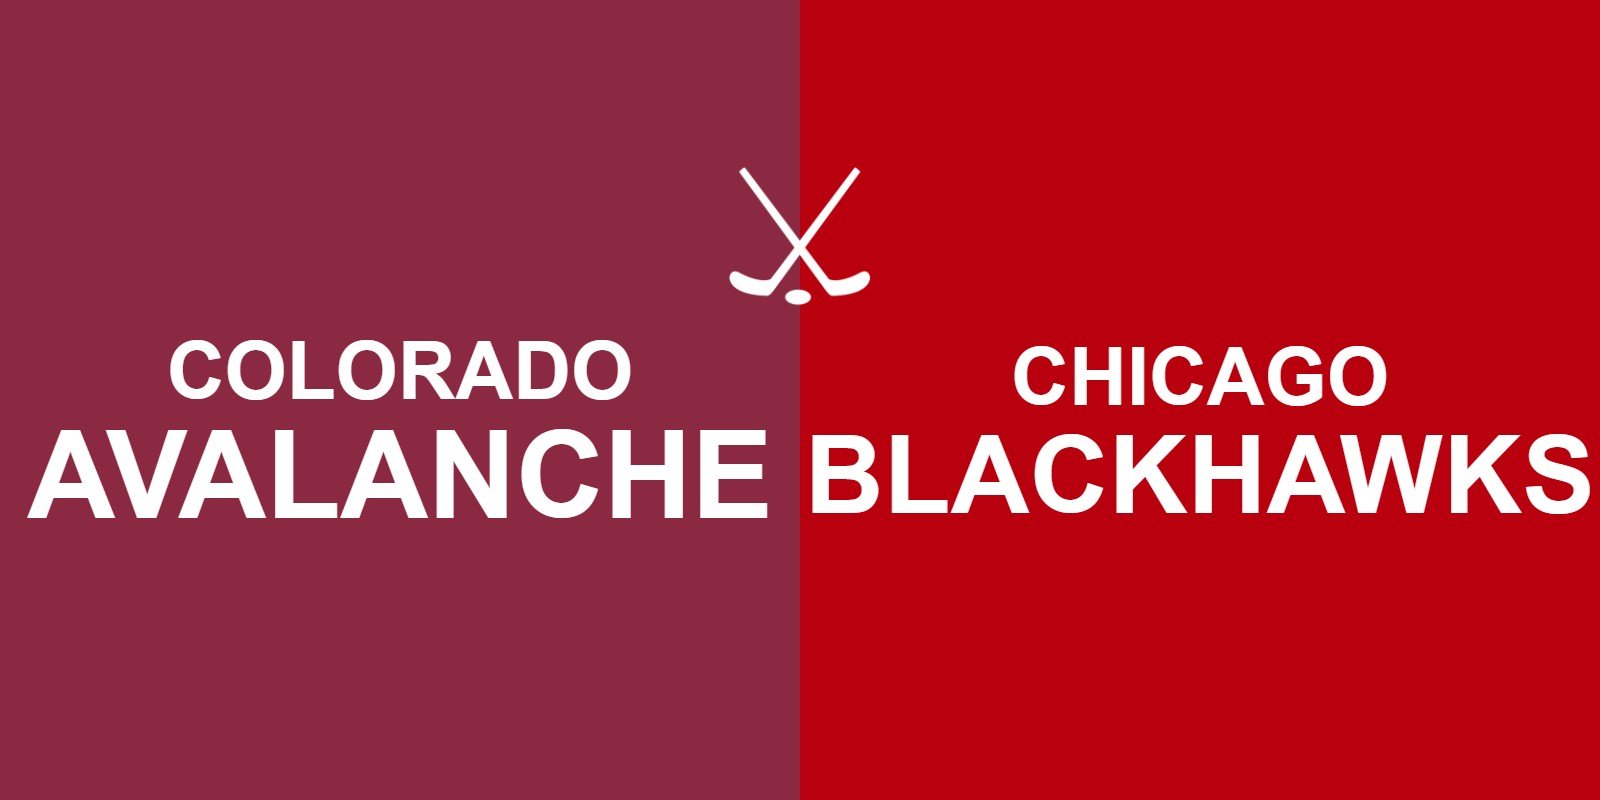 Avalanche vs Blackhawks